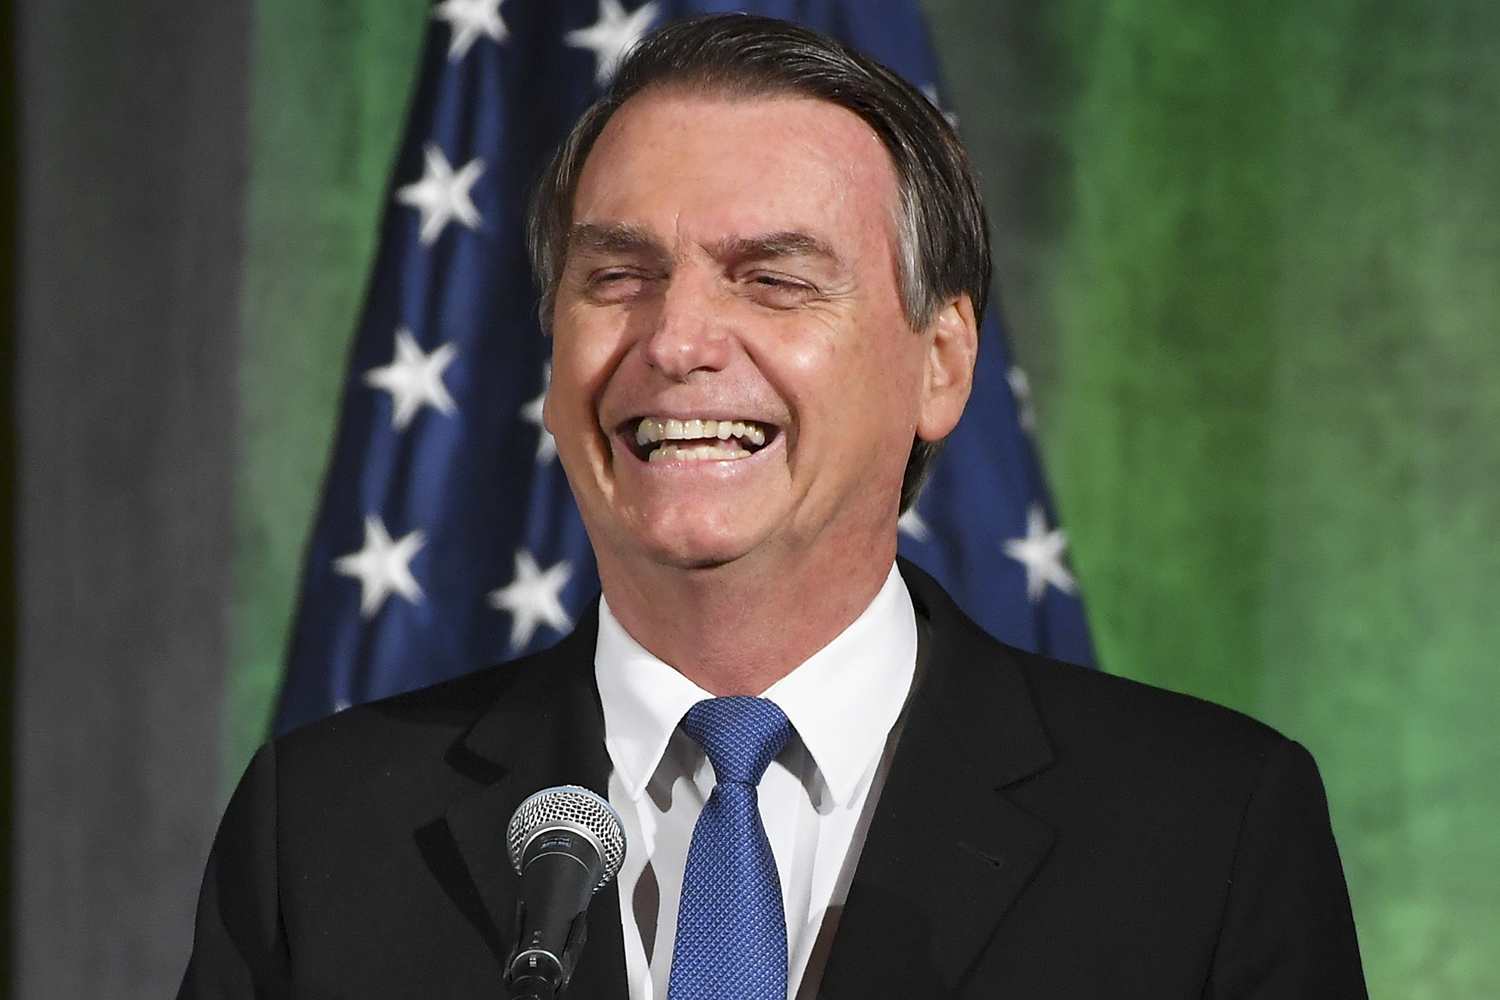 brasil-politica-bolsonaro-discurso-20190318-006-copy.jpg